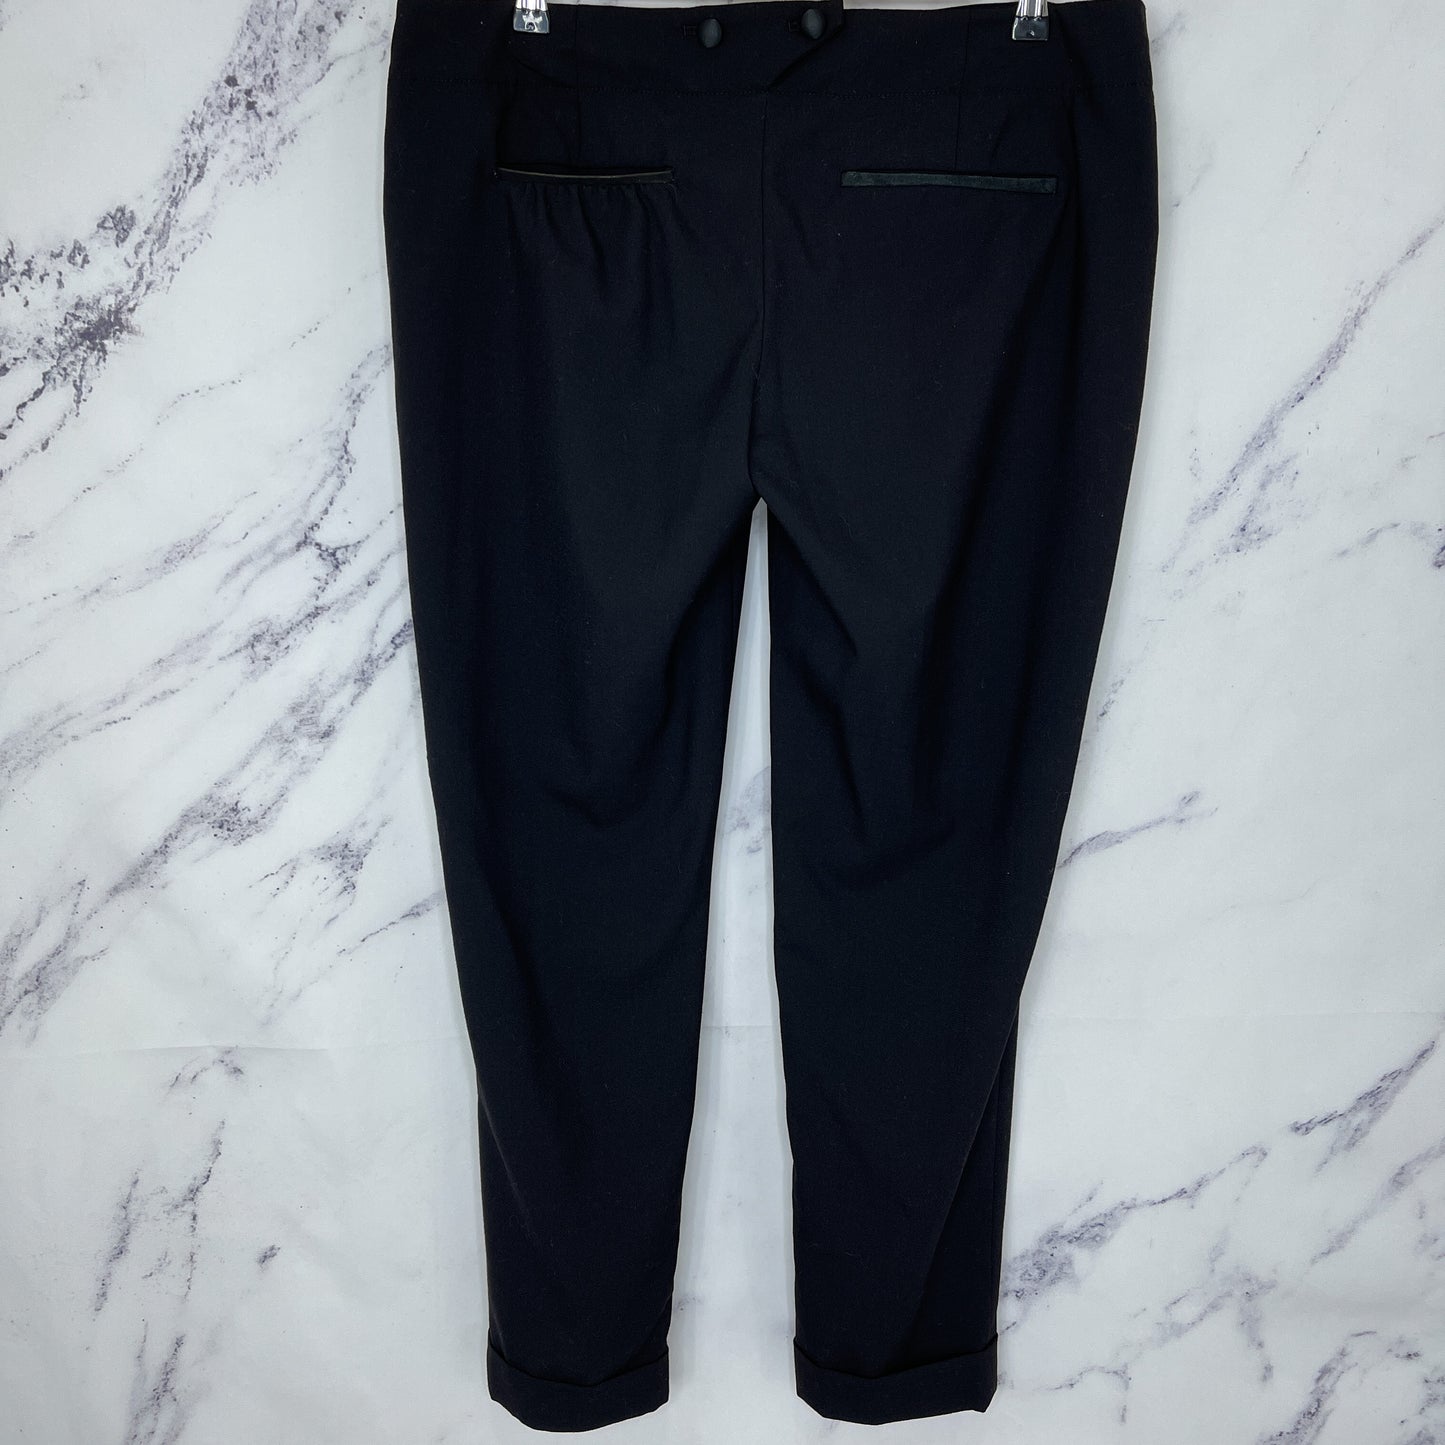 Juicy Couture | Black Cuffed Hem Trouser Pants | Sz 10